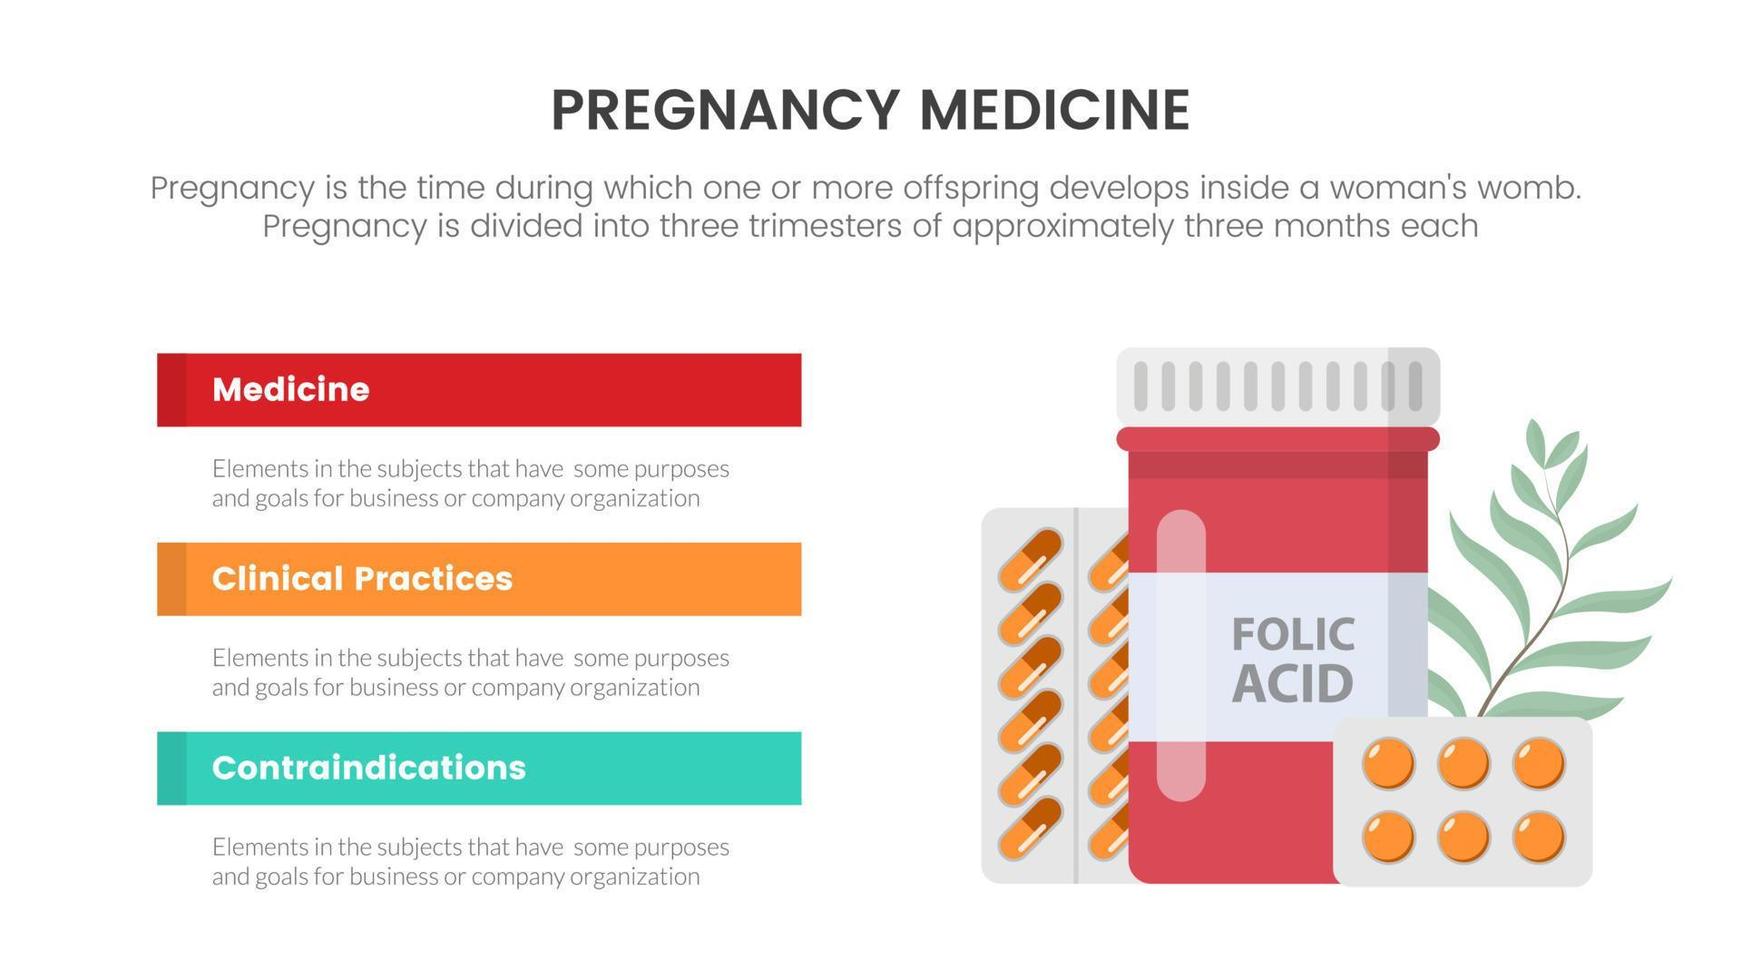 medicine and drug pregnant or pregnancy infographic concept for slide presentation with 3 point list vector